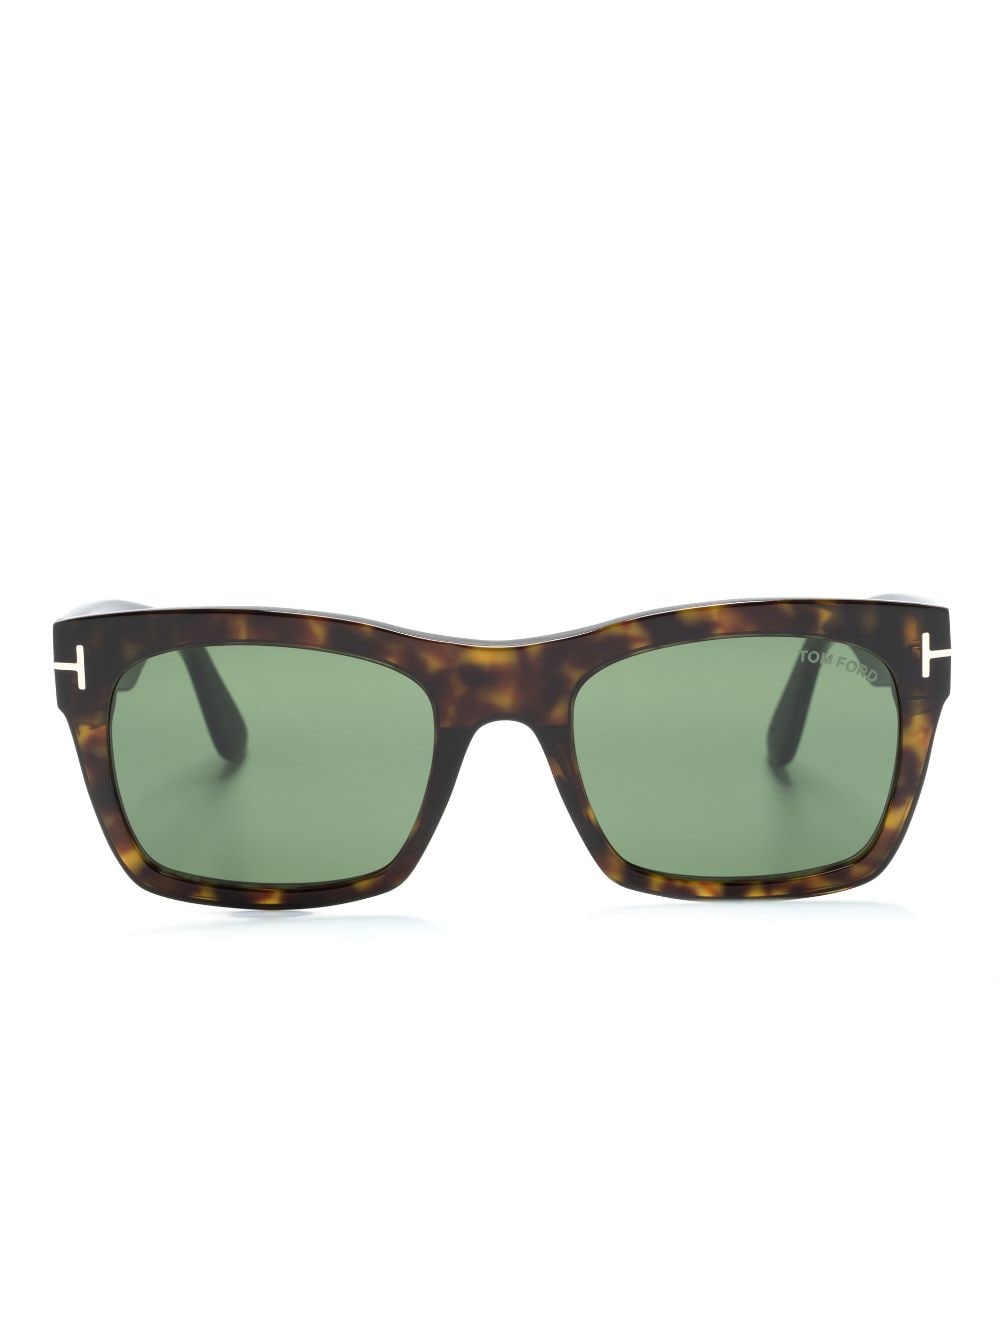 TOM FORD Eyewear tortoiseshell square-frame sunglasses - Brown von TOM FORD Eyewear